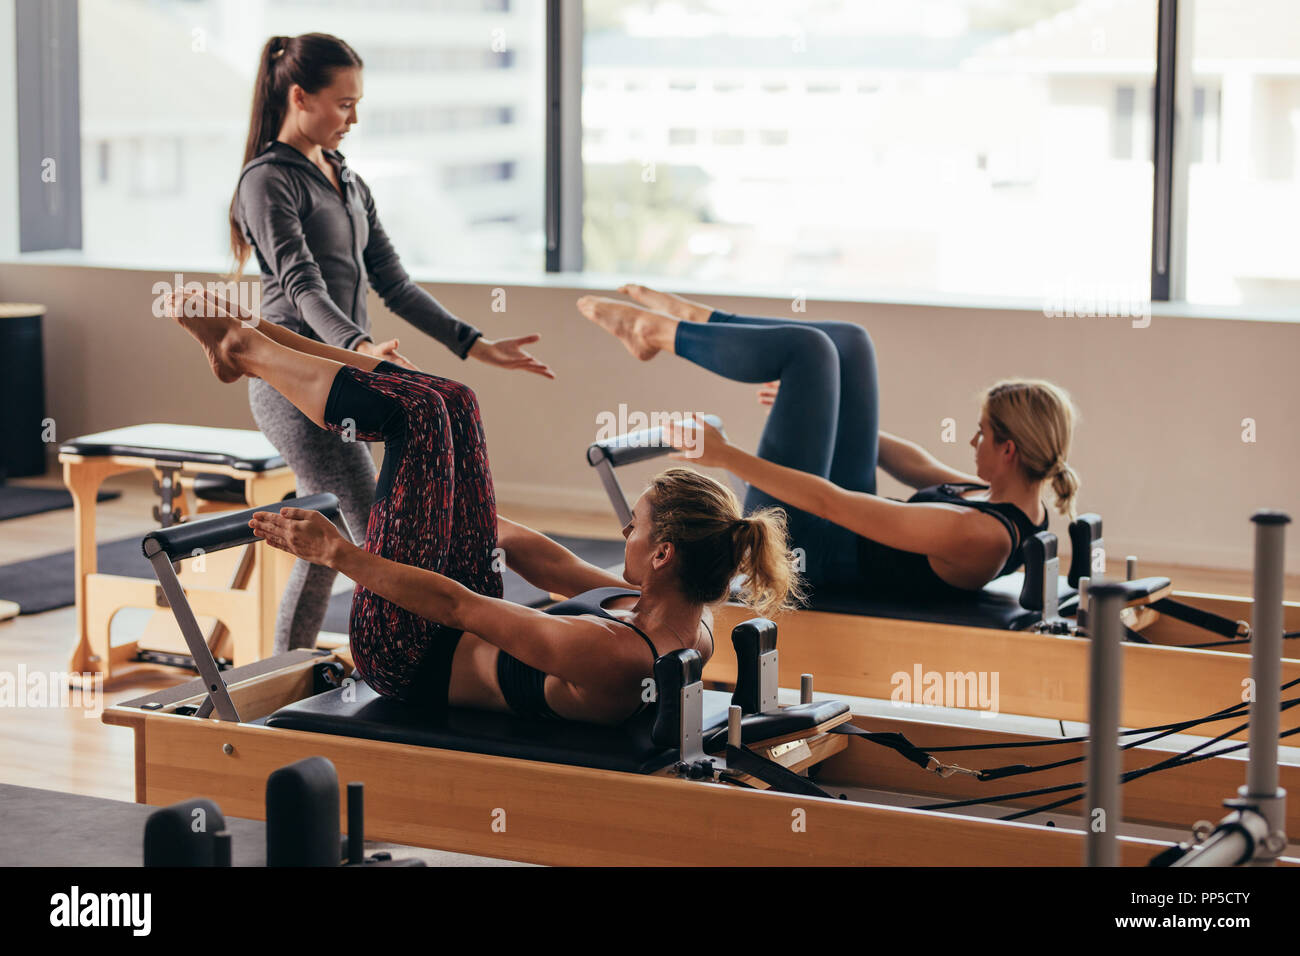 Women doing pilates exercises lying on pilates workout machines